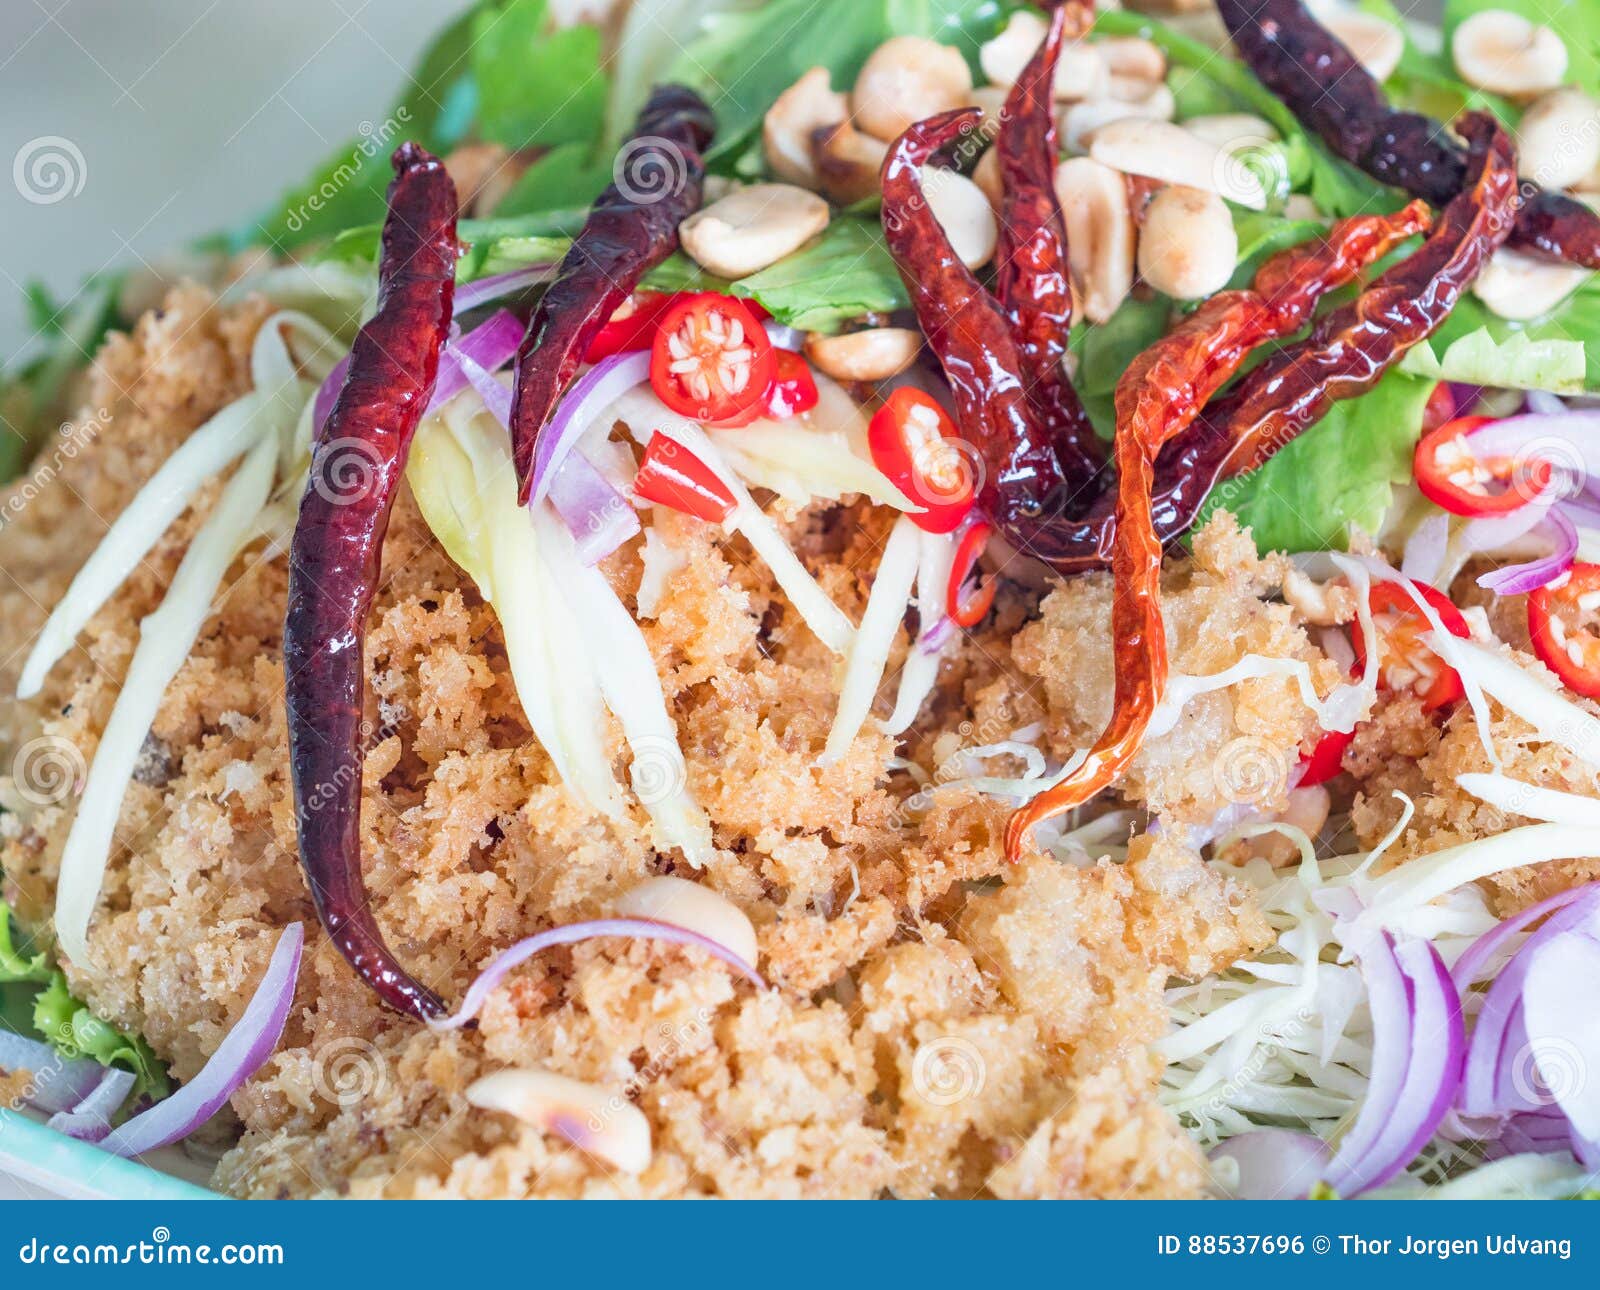 thai food, yam pla duk foo